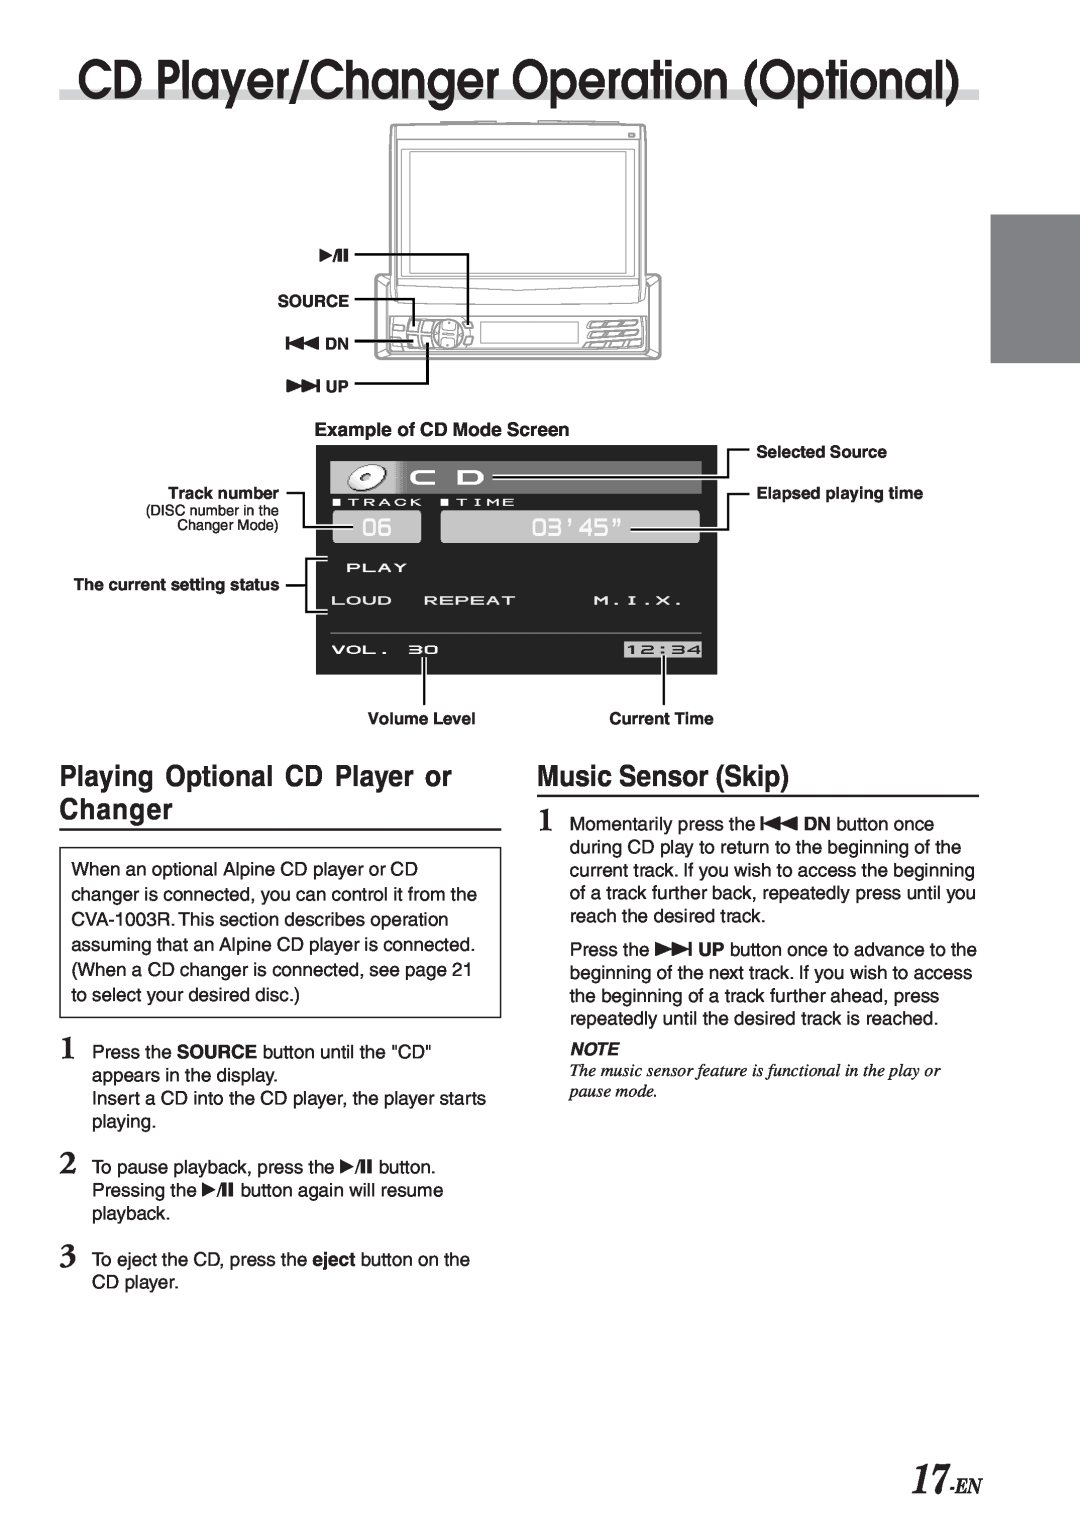 Alpine CVA-1003R CD Player/Changer Operation Optional, Playing Optional CD Player or Changer, Music Sensor Skip, 17-EN 